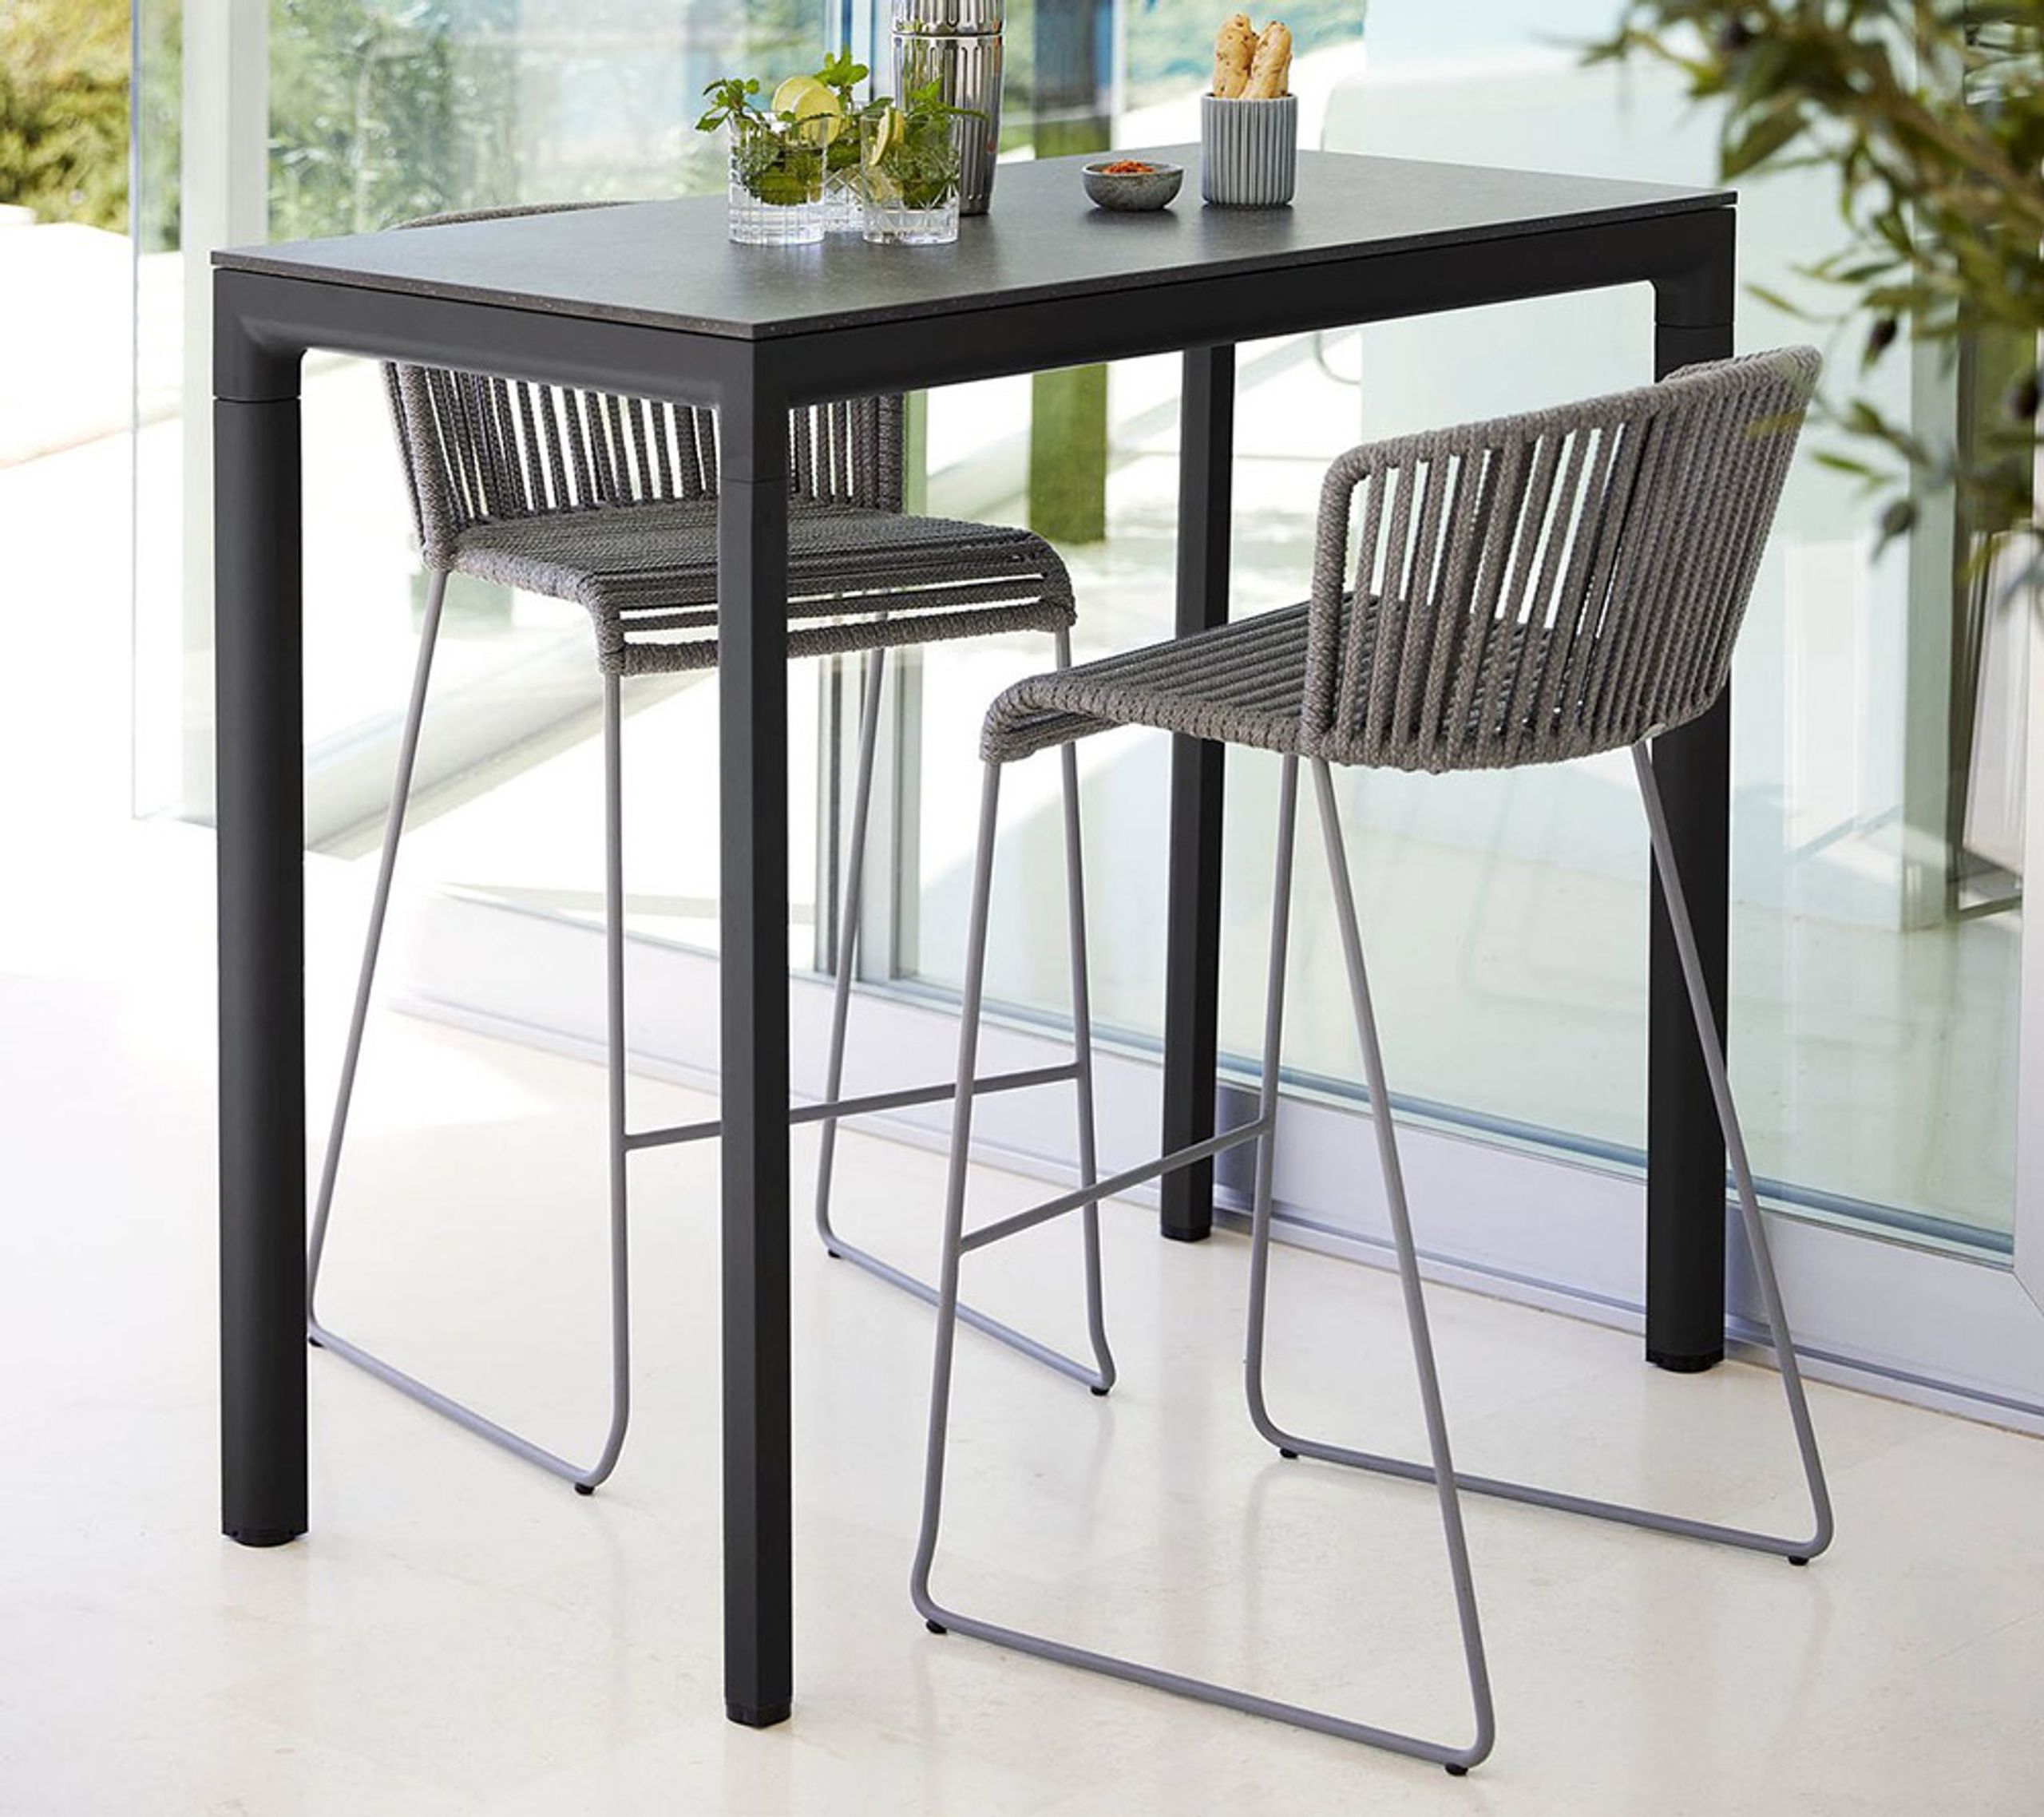 Cane-line - Mesa de jardim - Drop bar table - 130x70 - Frame: Light Grey Aluminum / Tabletop: Grey Fossil Ceramic